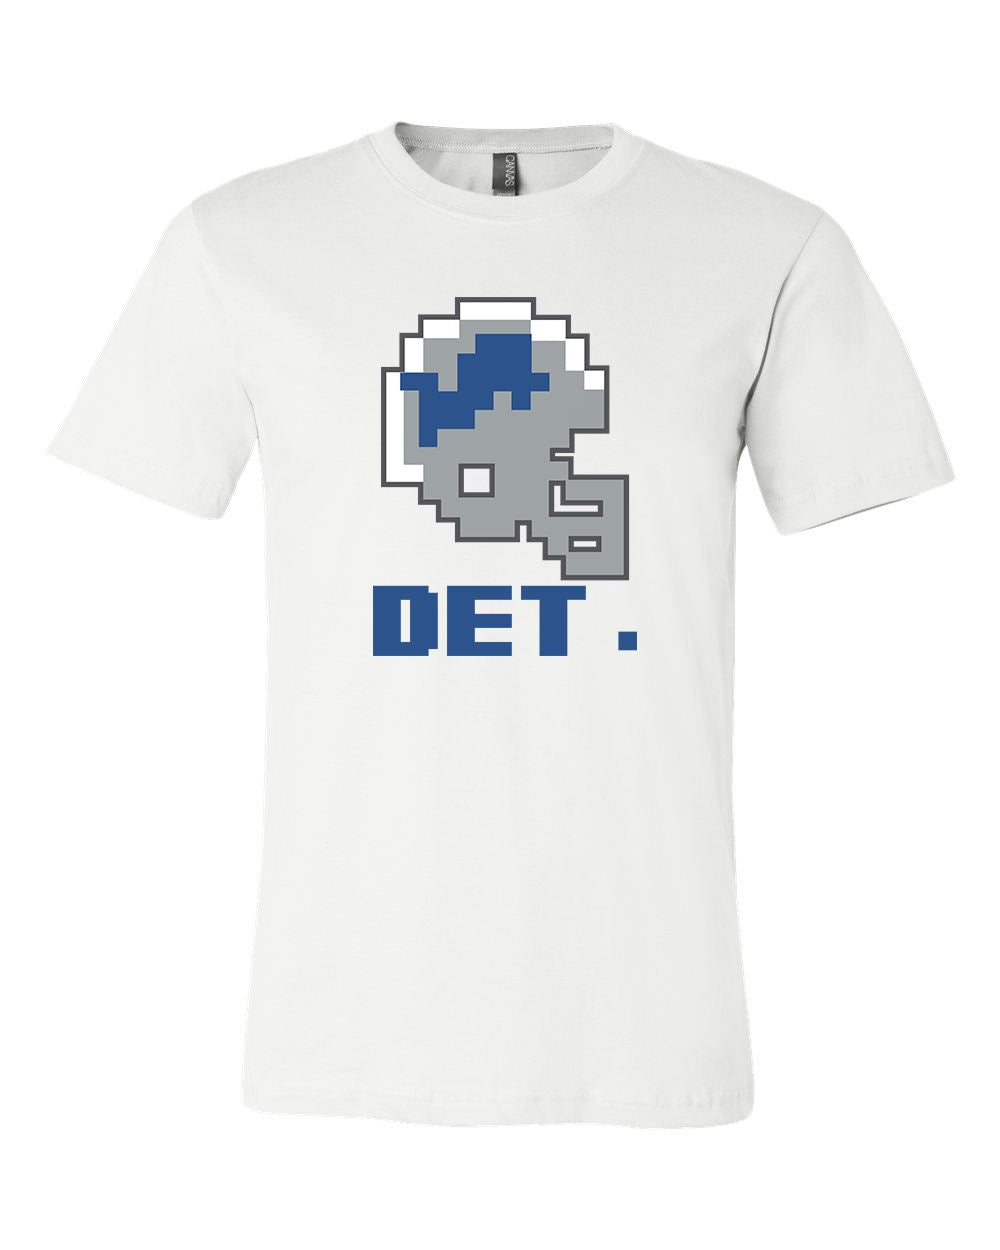 Detroit Lions old logo Retro tecmo bowl jersey shirt